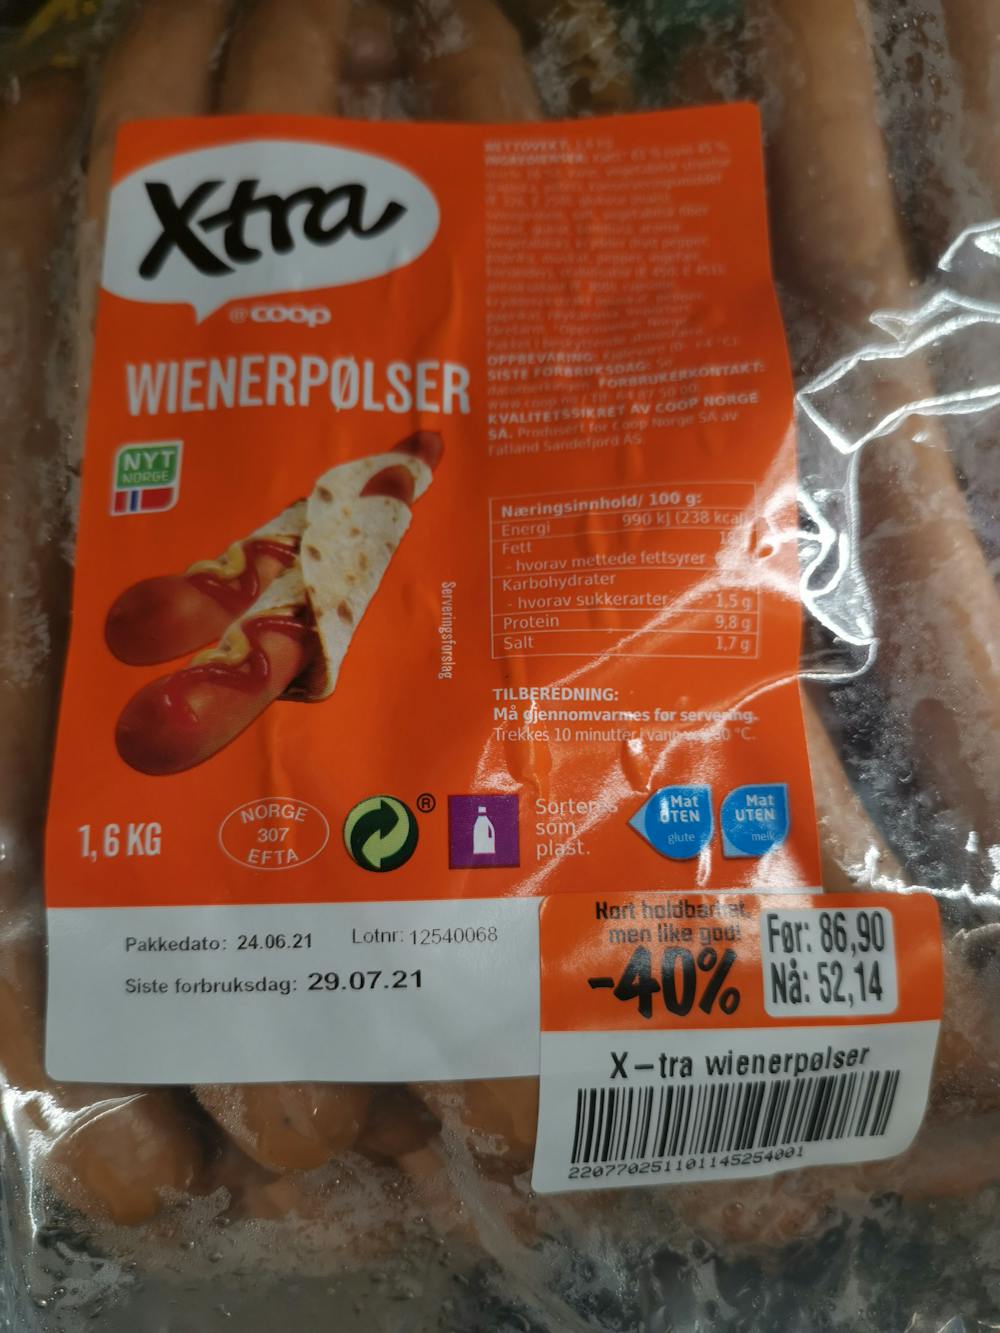 Wienerpølser, Xtra